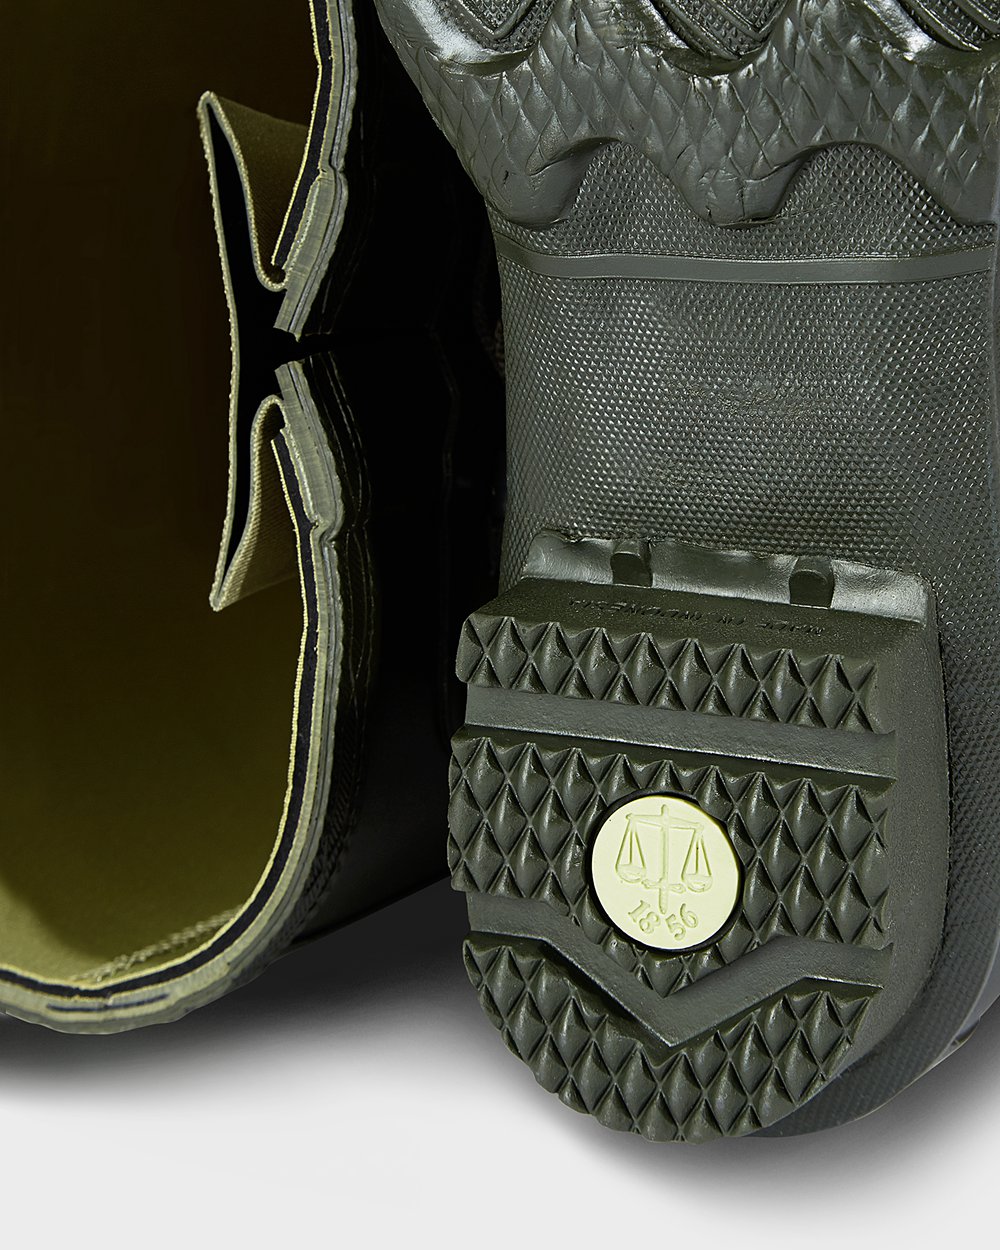 Mens Tall Rain Boots - Hunter Norris Field Side Adjustable Neoprene Lined (18FUKVROY) - Dark Olive